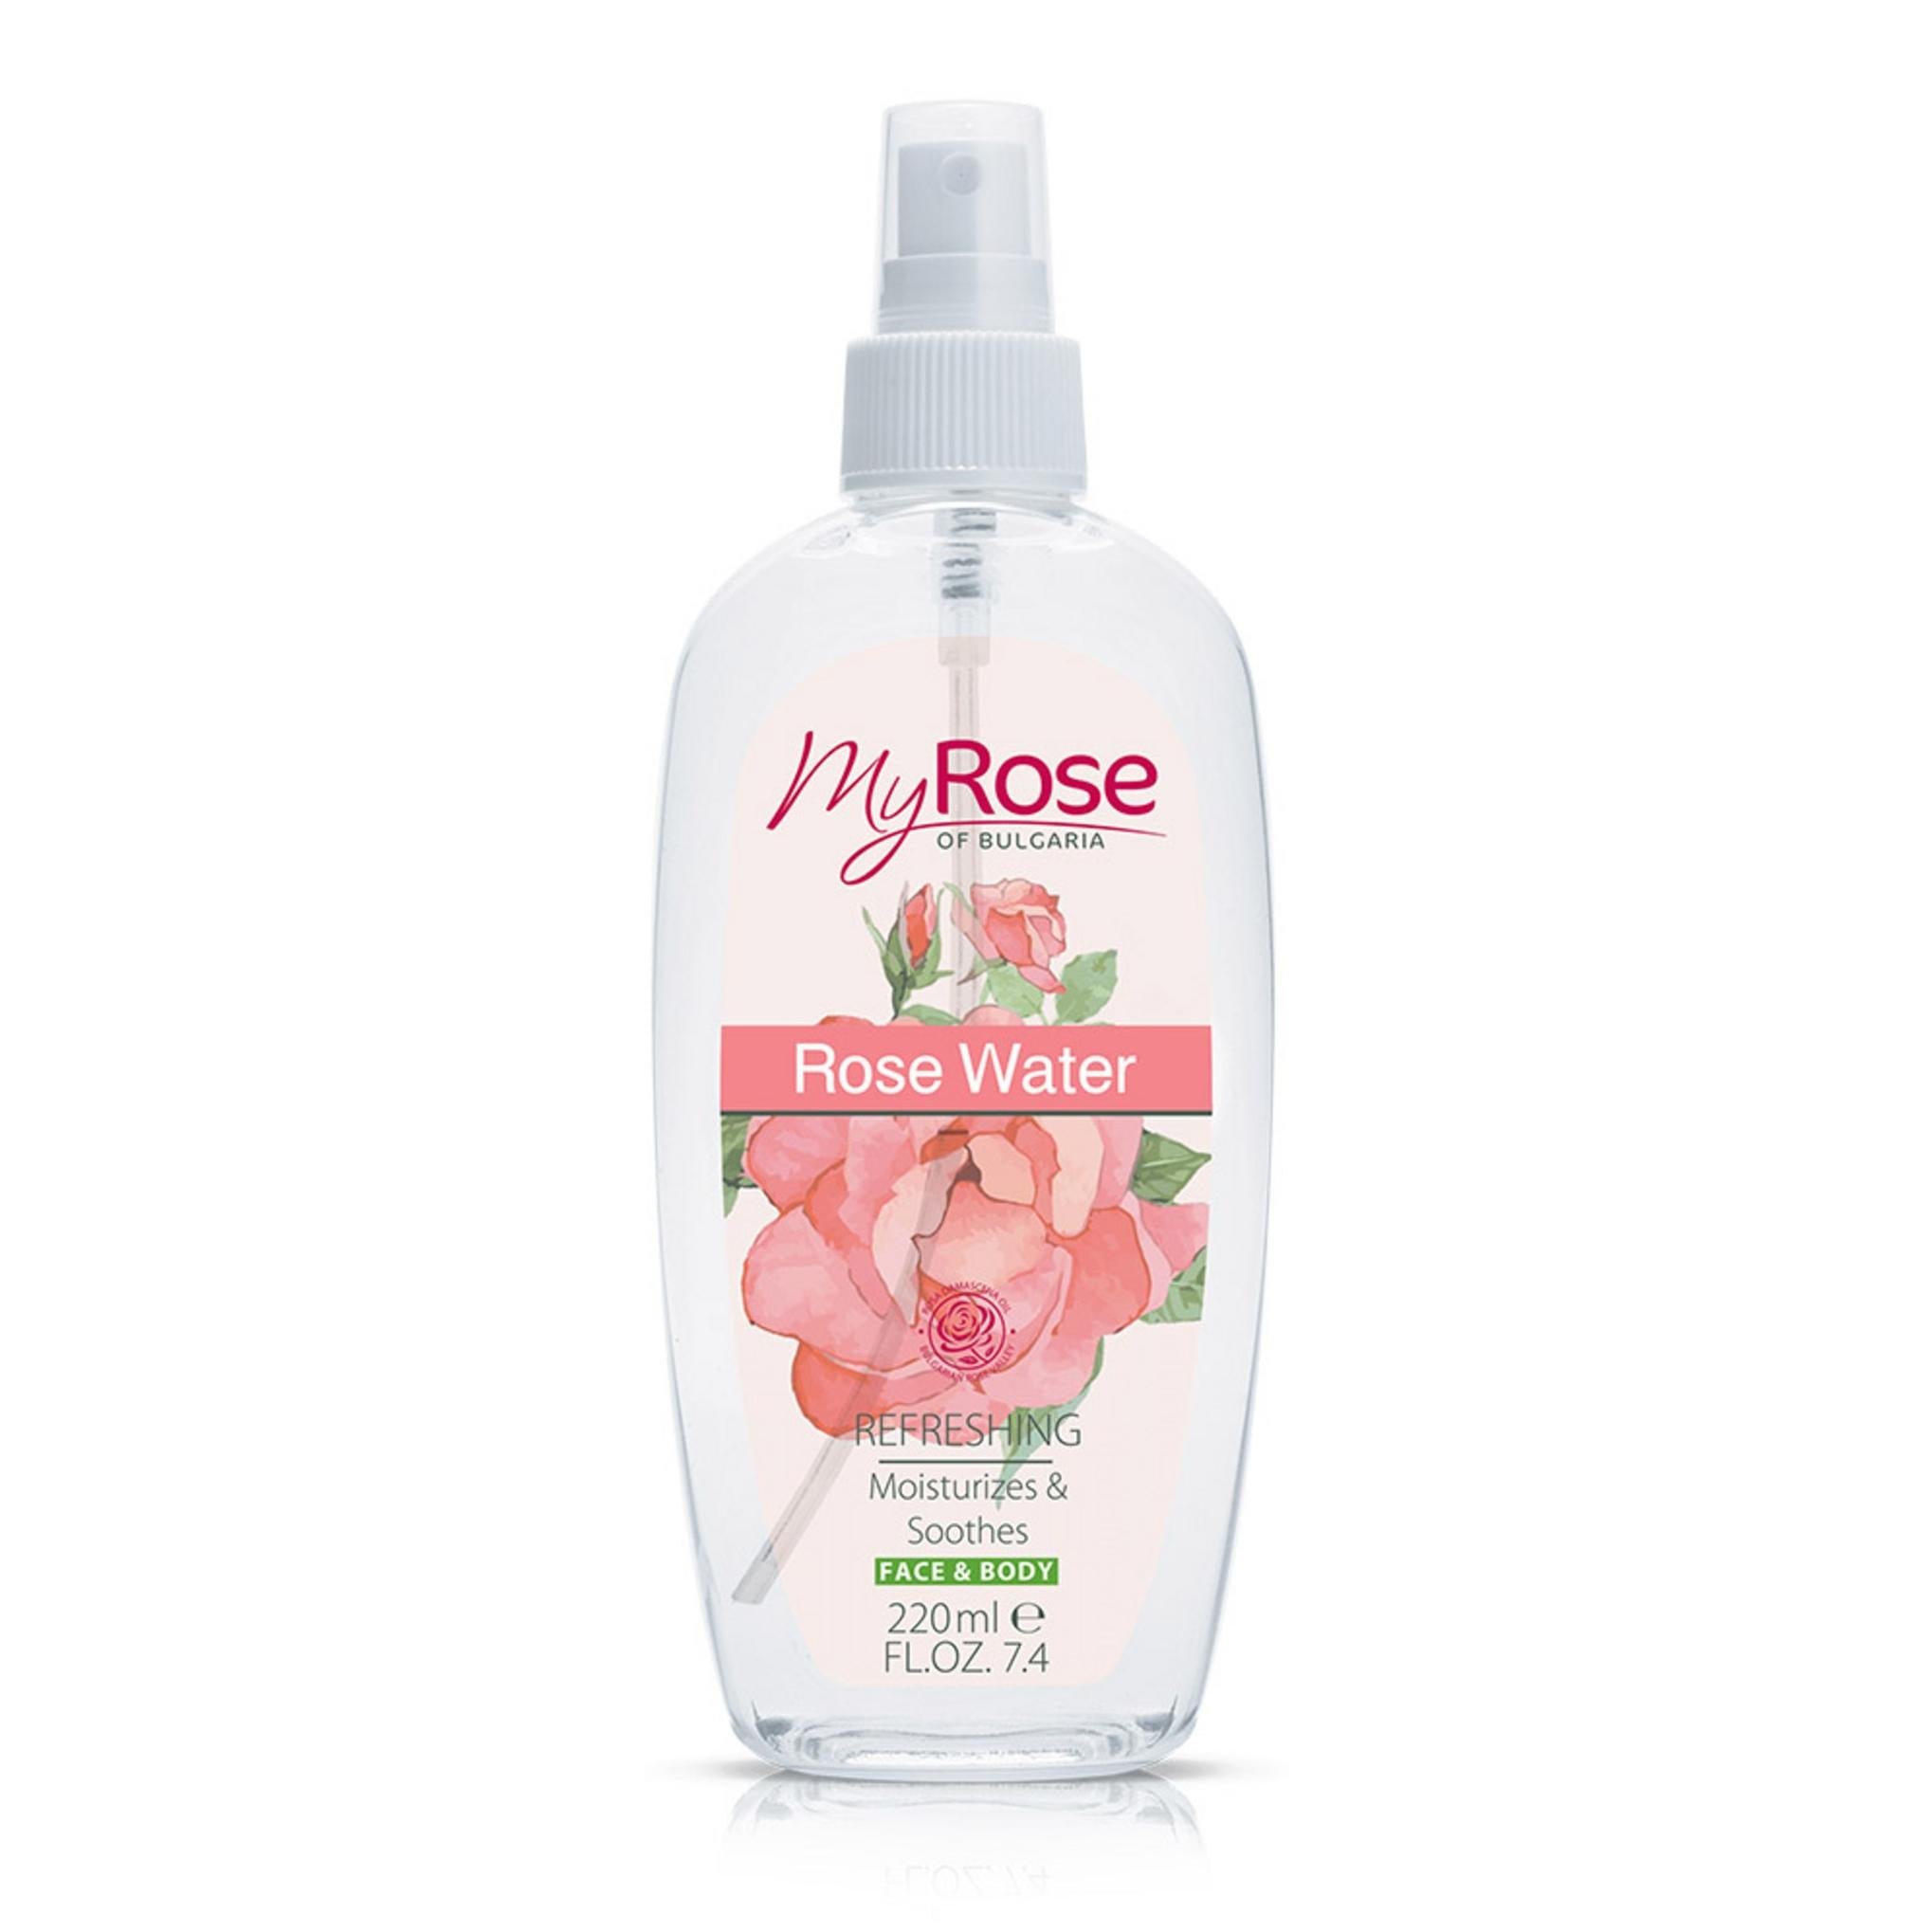 my rose rose water